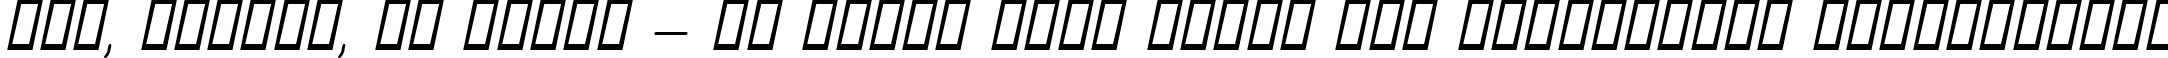 Пример написания шрифтом Aunchanted Oblique текста на украинском